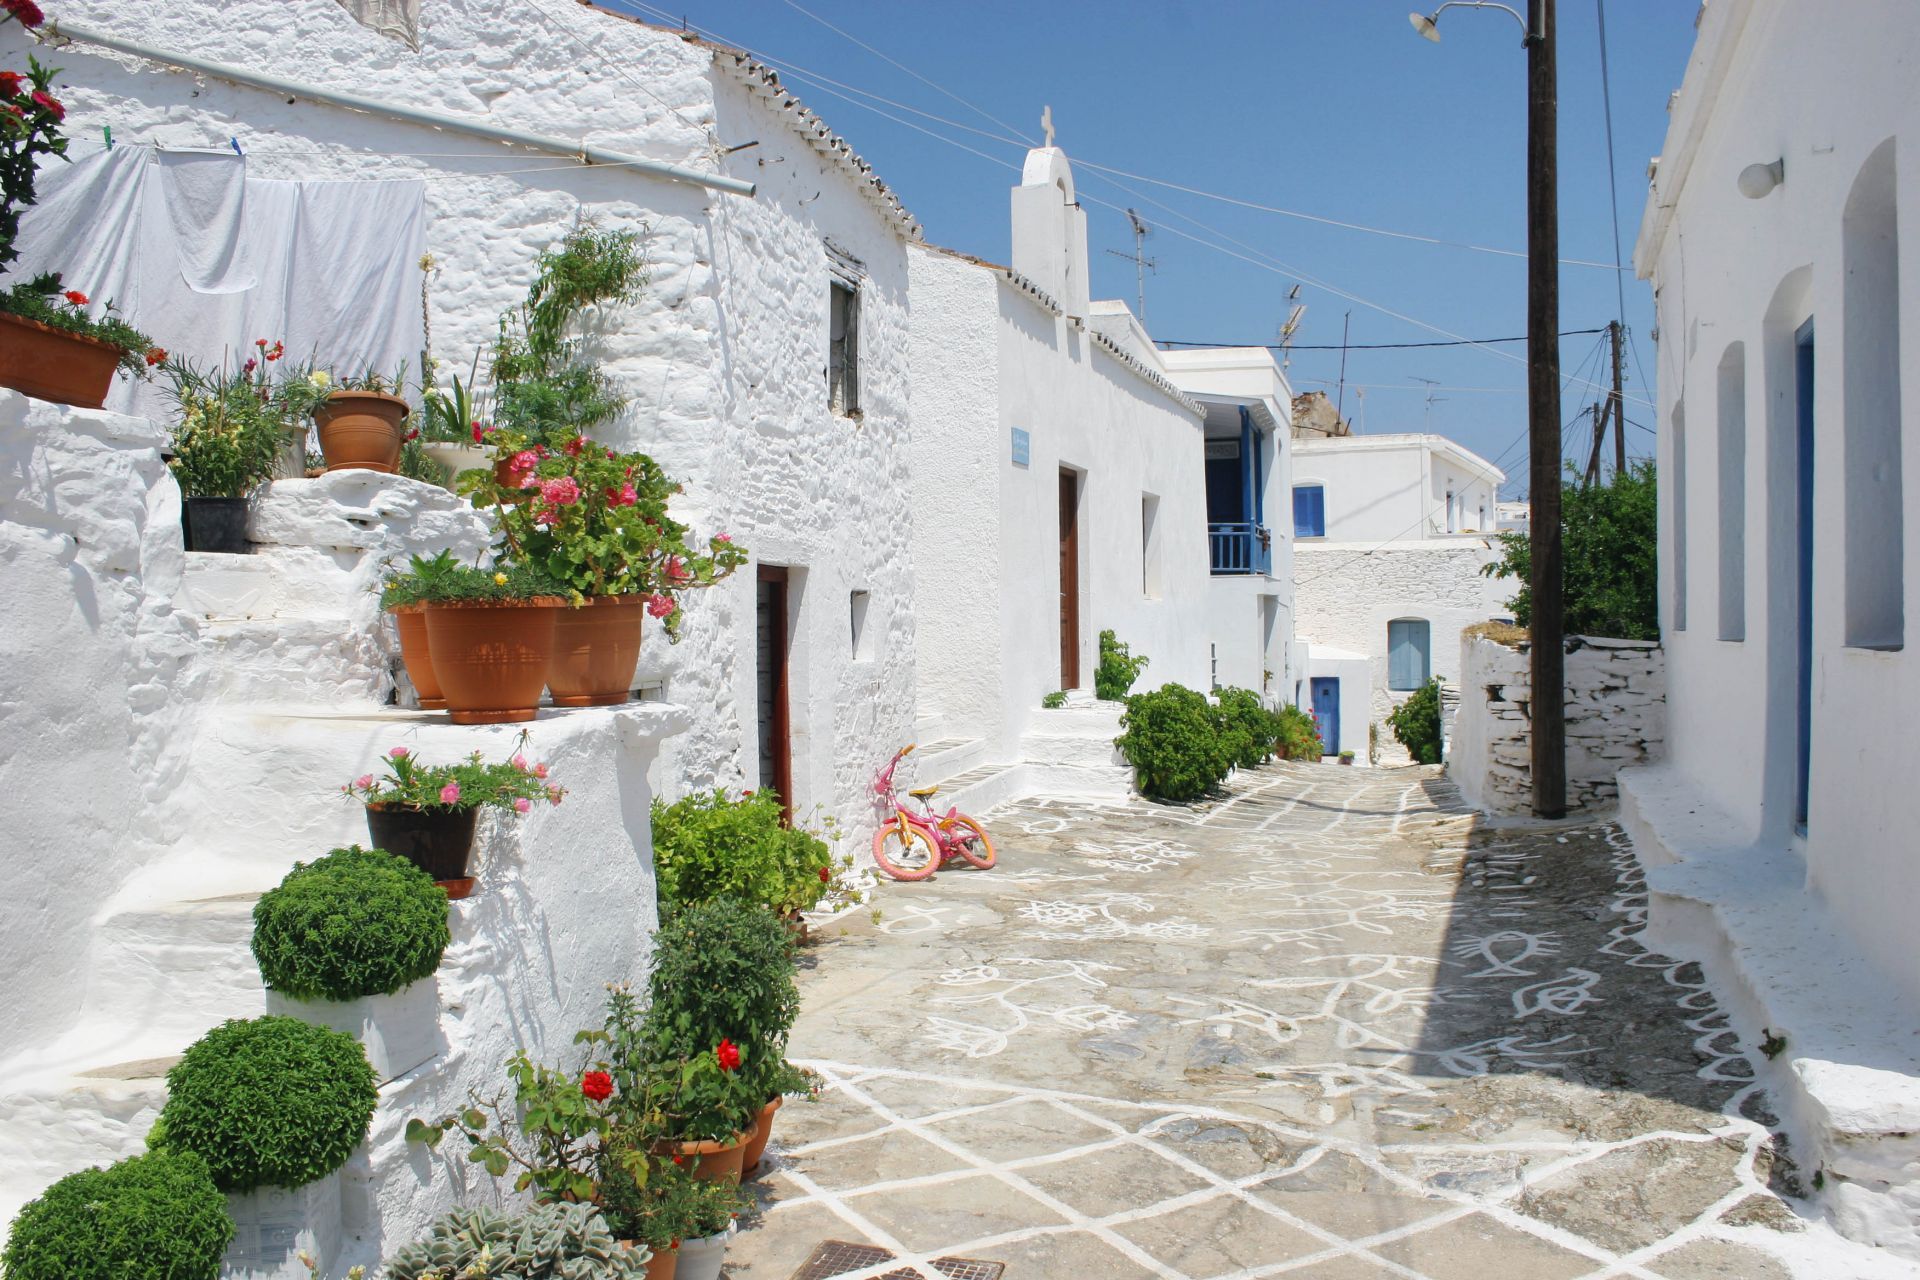 Kythnos island: The alleys of Chora